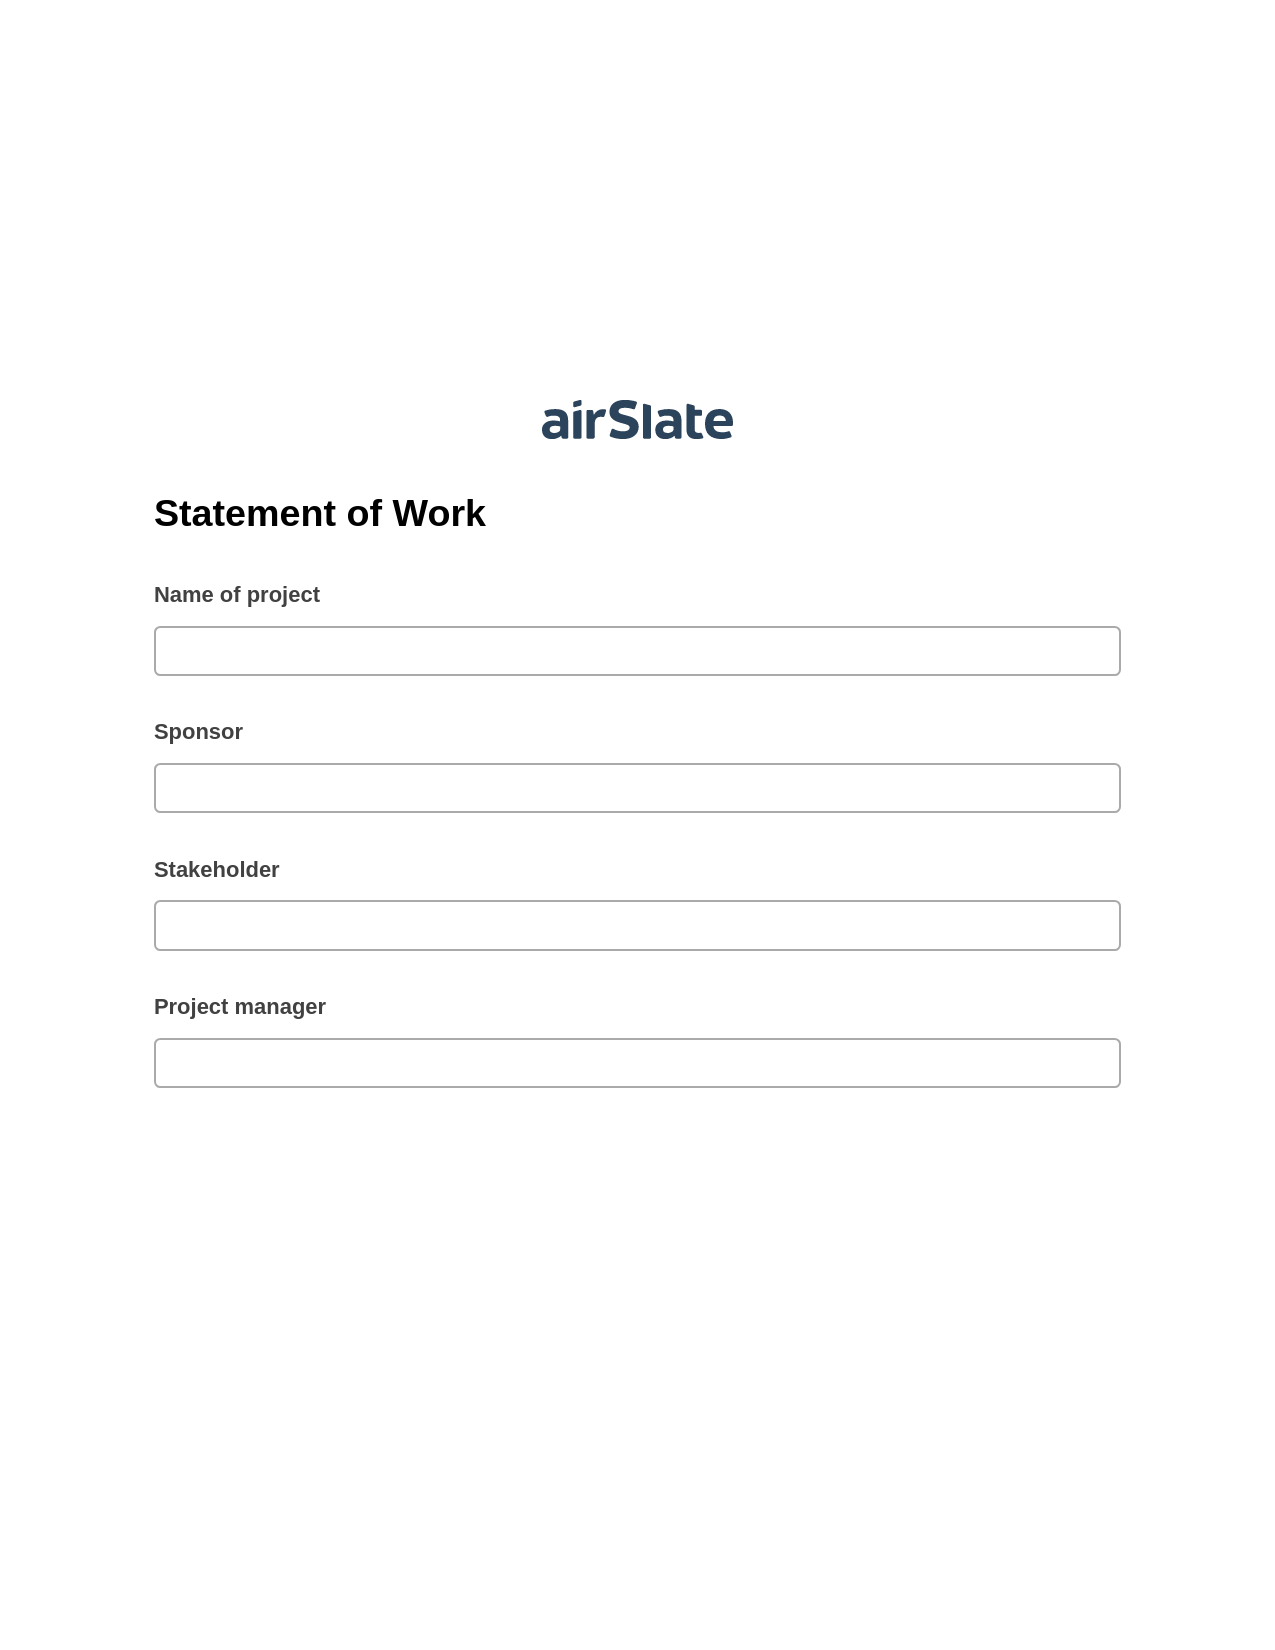 Multirole Statement of Work Pre-fill from Salesforce Record Bot, Google Sheet Two-Way Binding Bot, Post-finish Document Bot